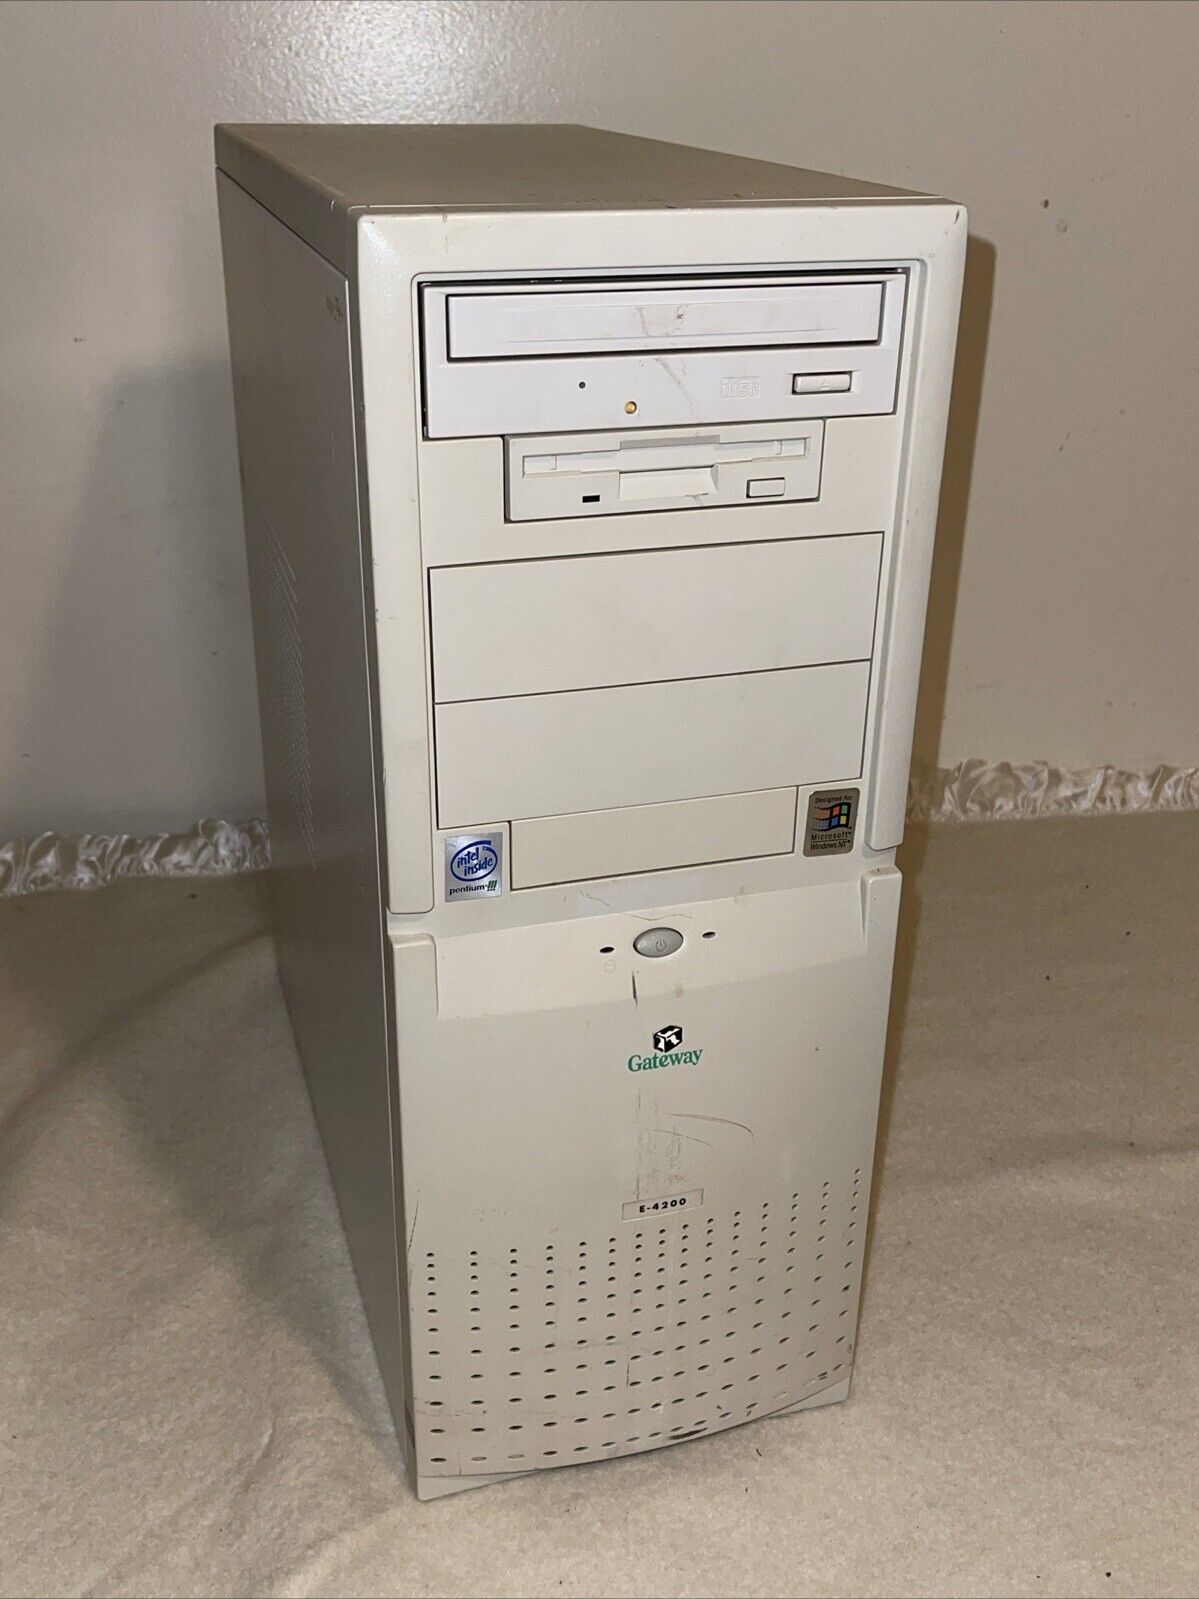 Gateway Gateway TBR E-4200 Pentium III 450MHz 128MB RAM Vintage Desktop Computer